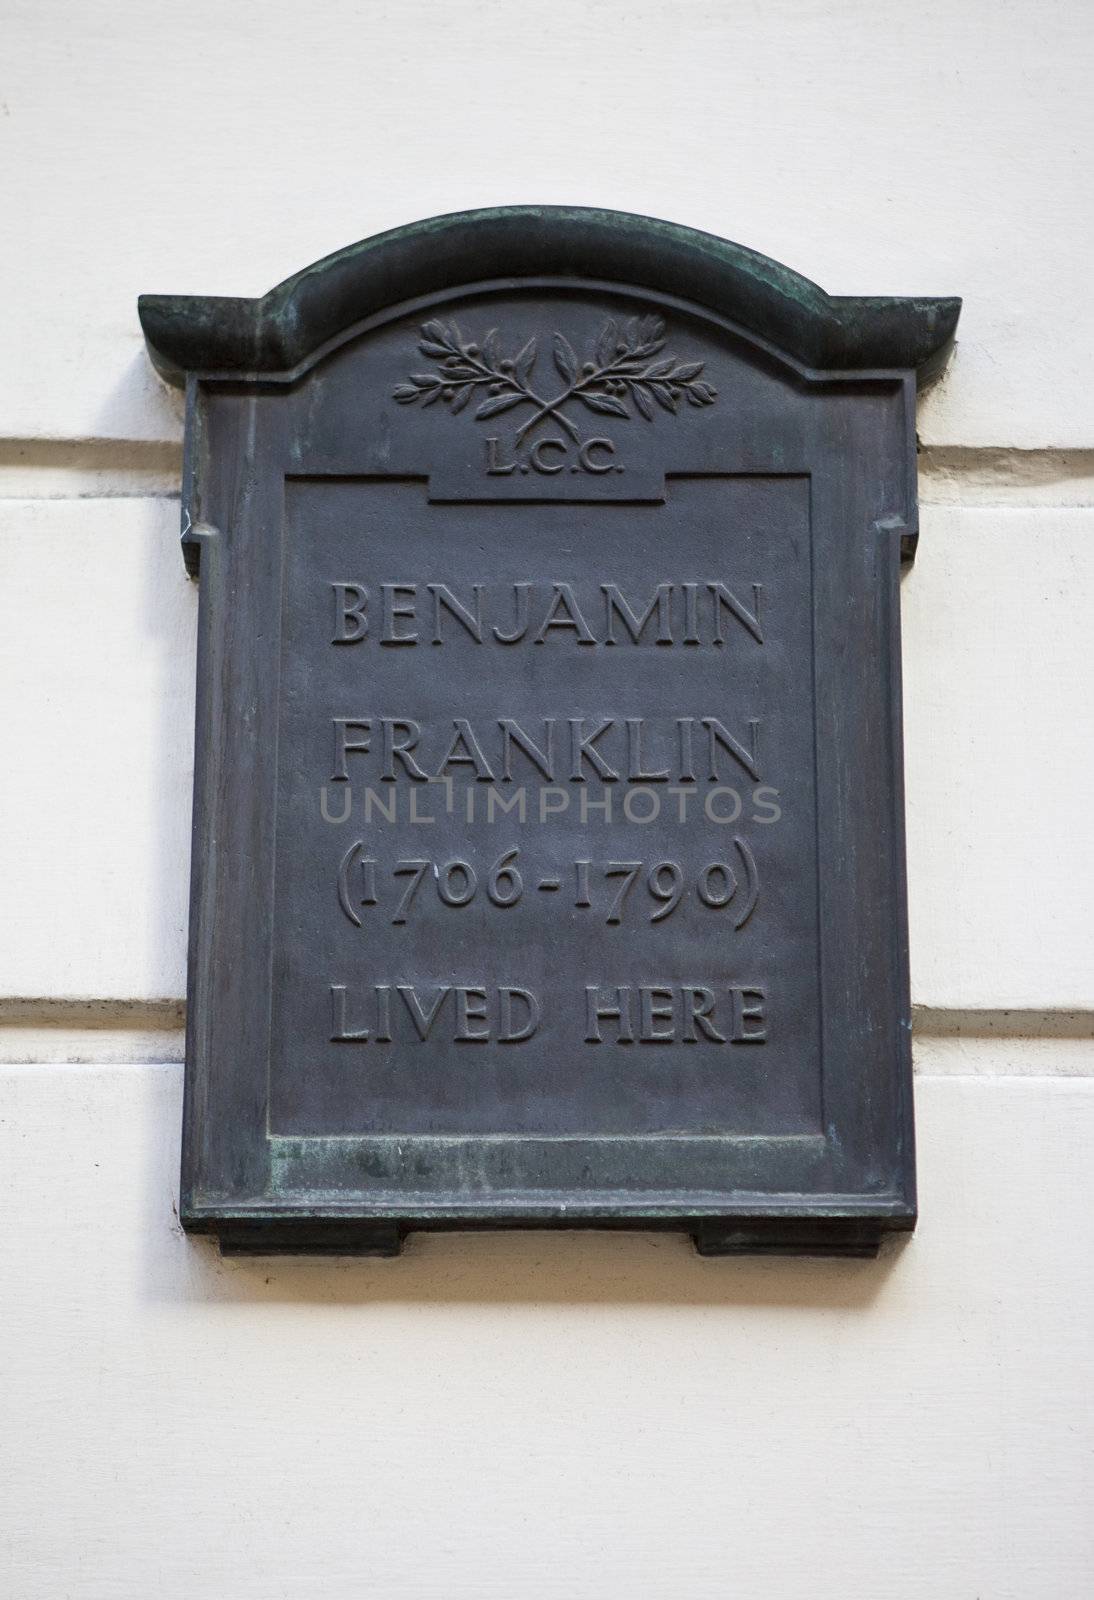 Plaque on Benjamin Franklin House in London by chrisdorney